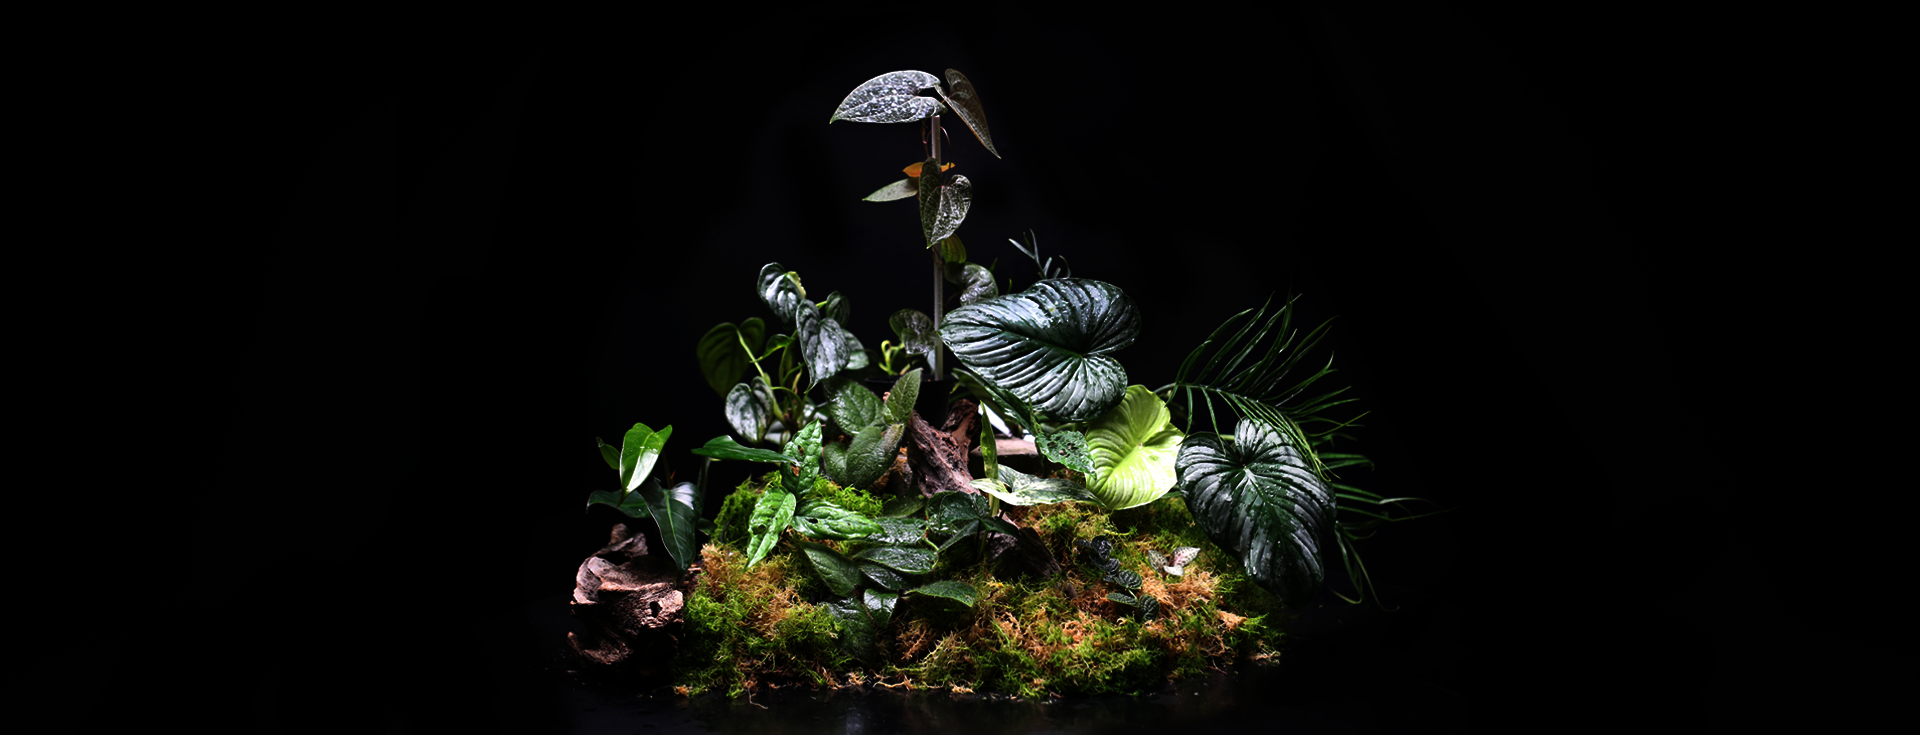 green-mirrors-plants